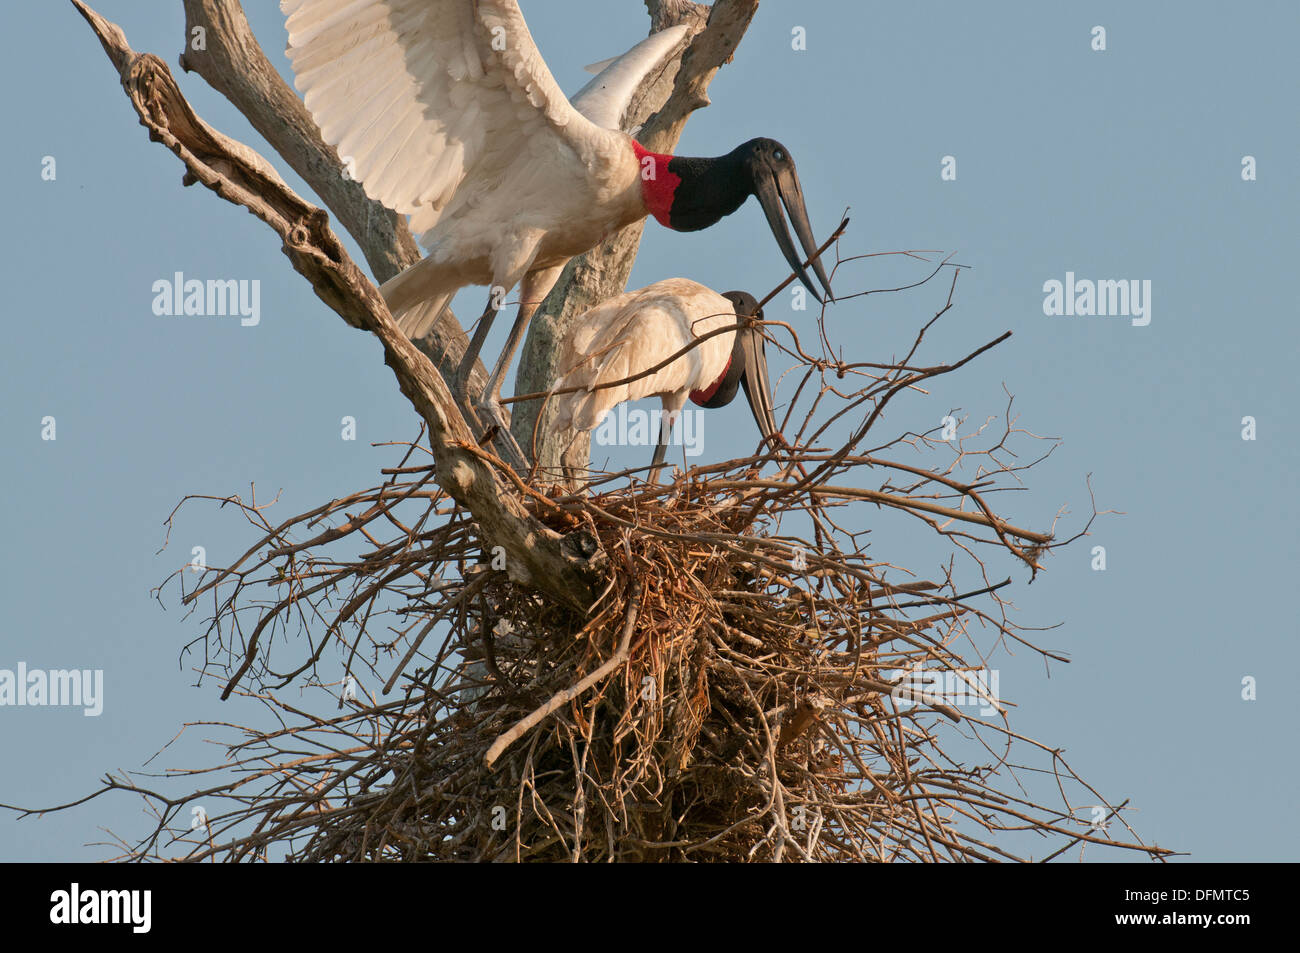 Stock photo of nesting jabiru storks, Pantanal, Brazil. Stock Photo